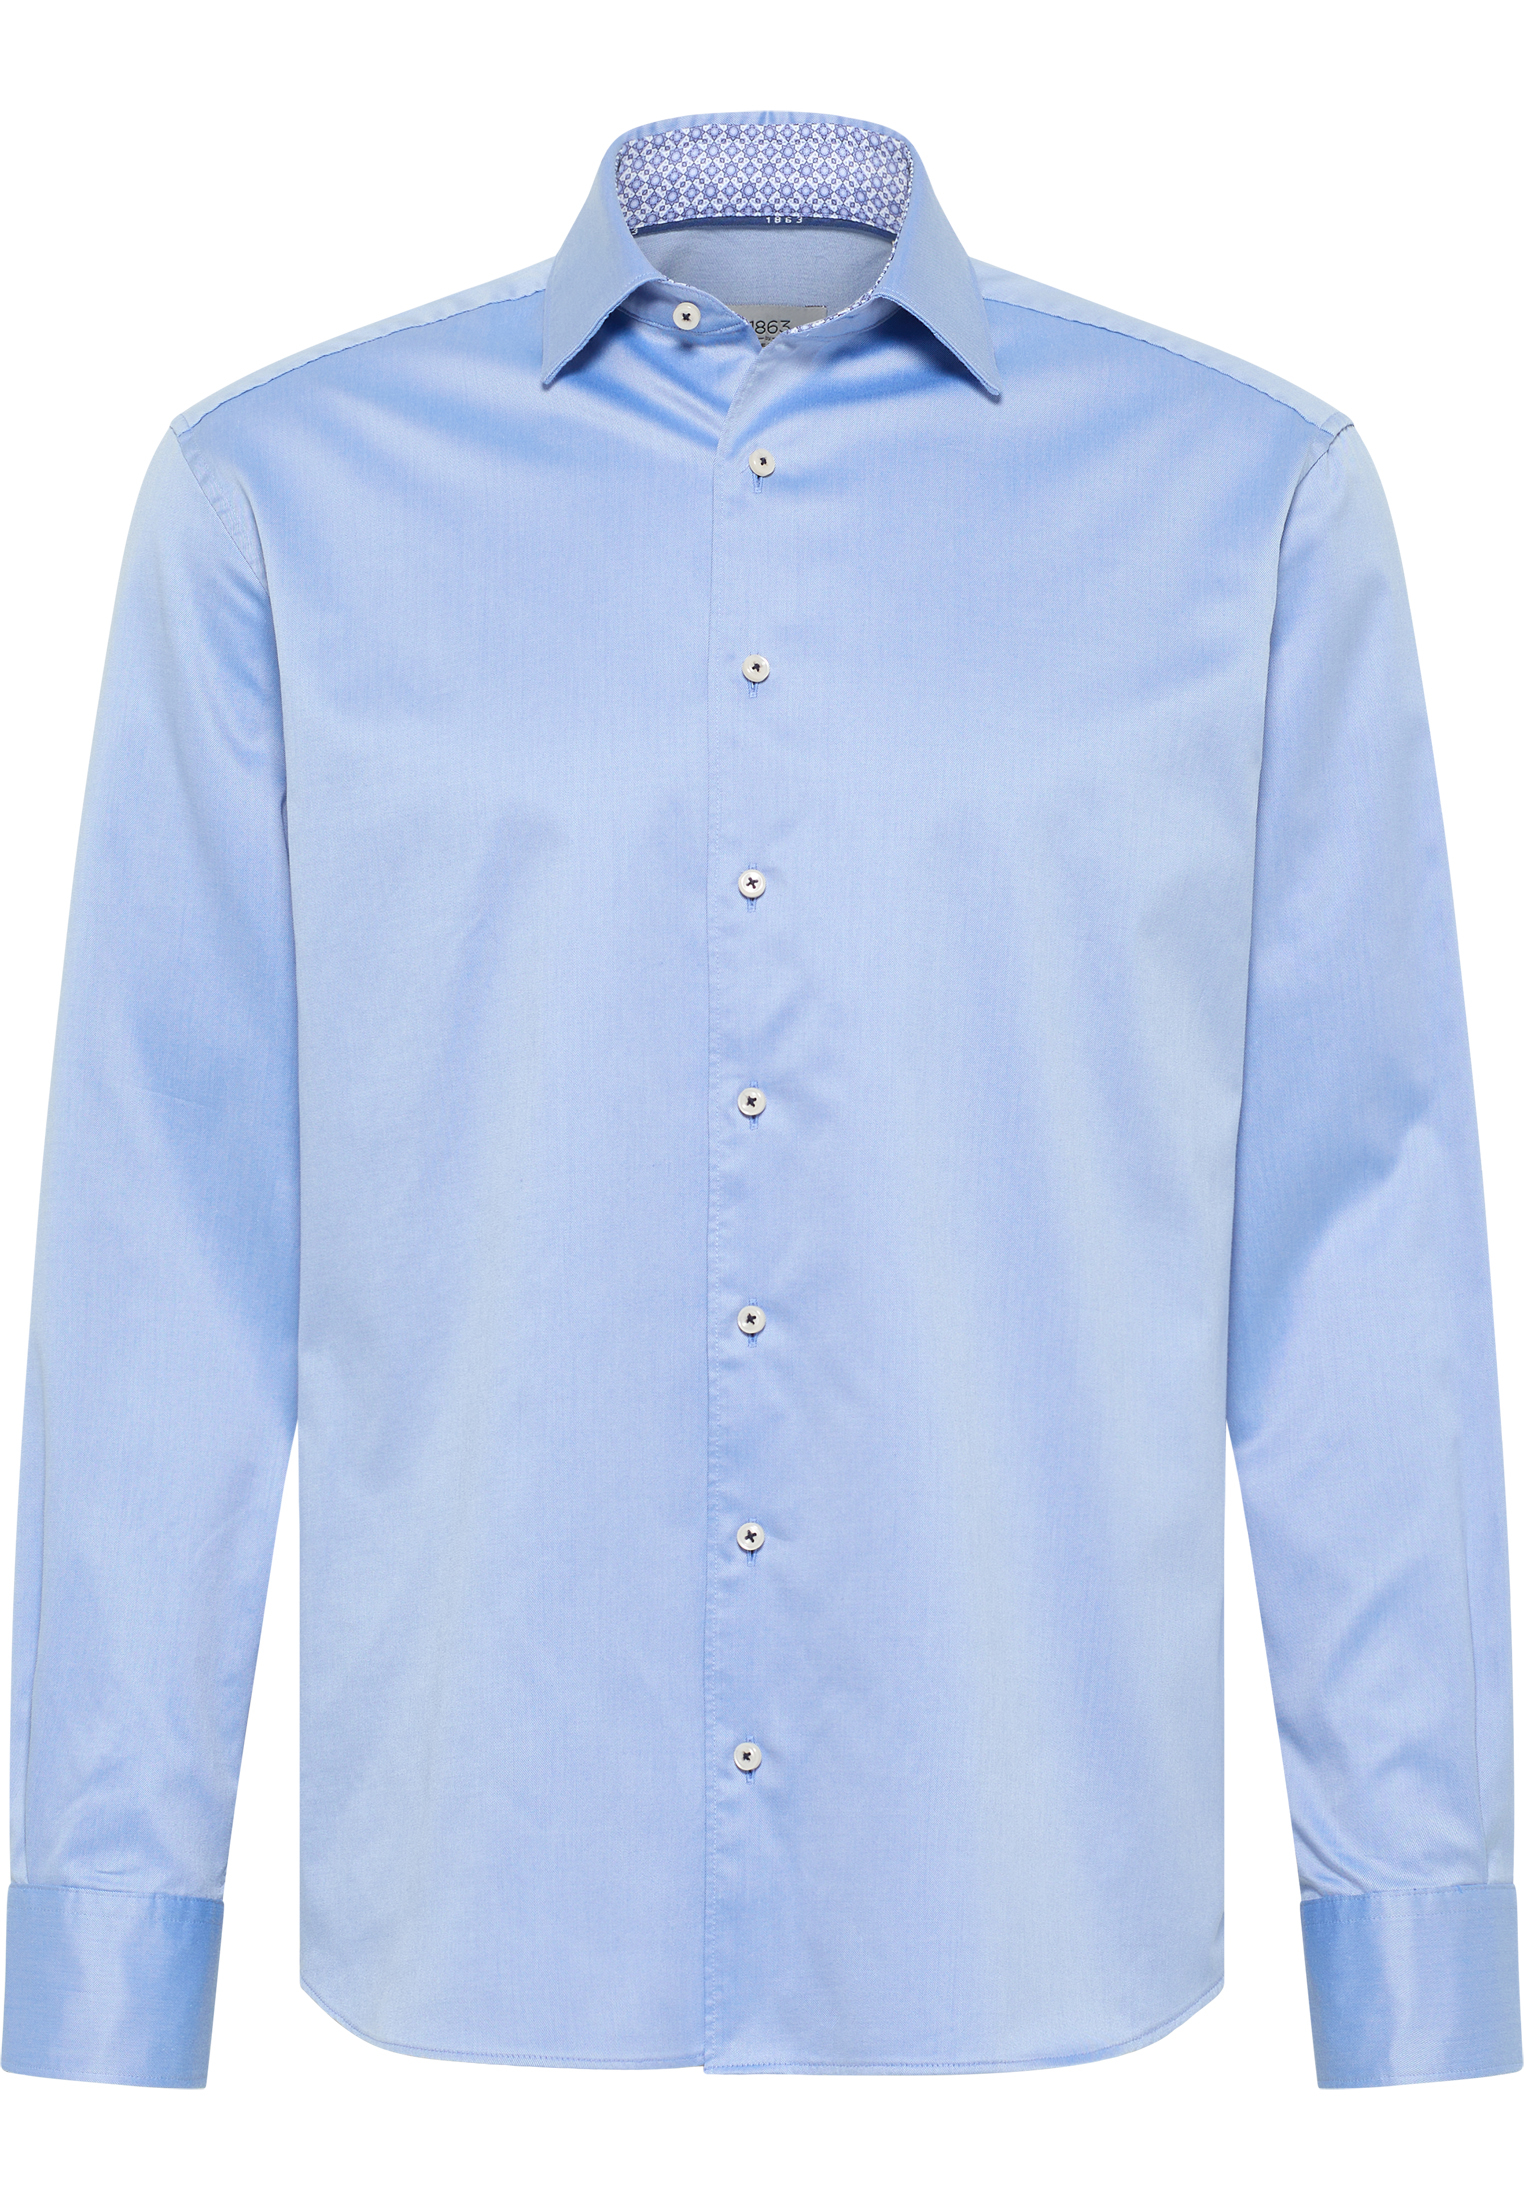 COMFORT FIT Soft Luxury Shirt in medium blue plain